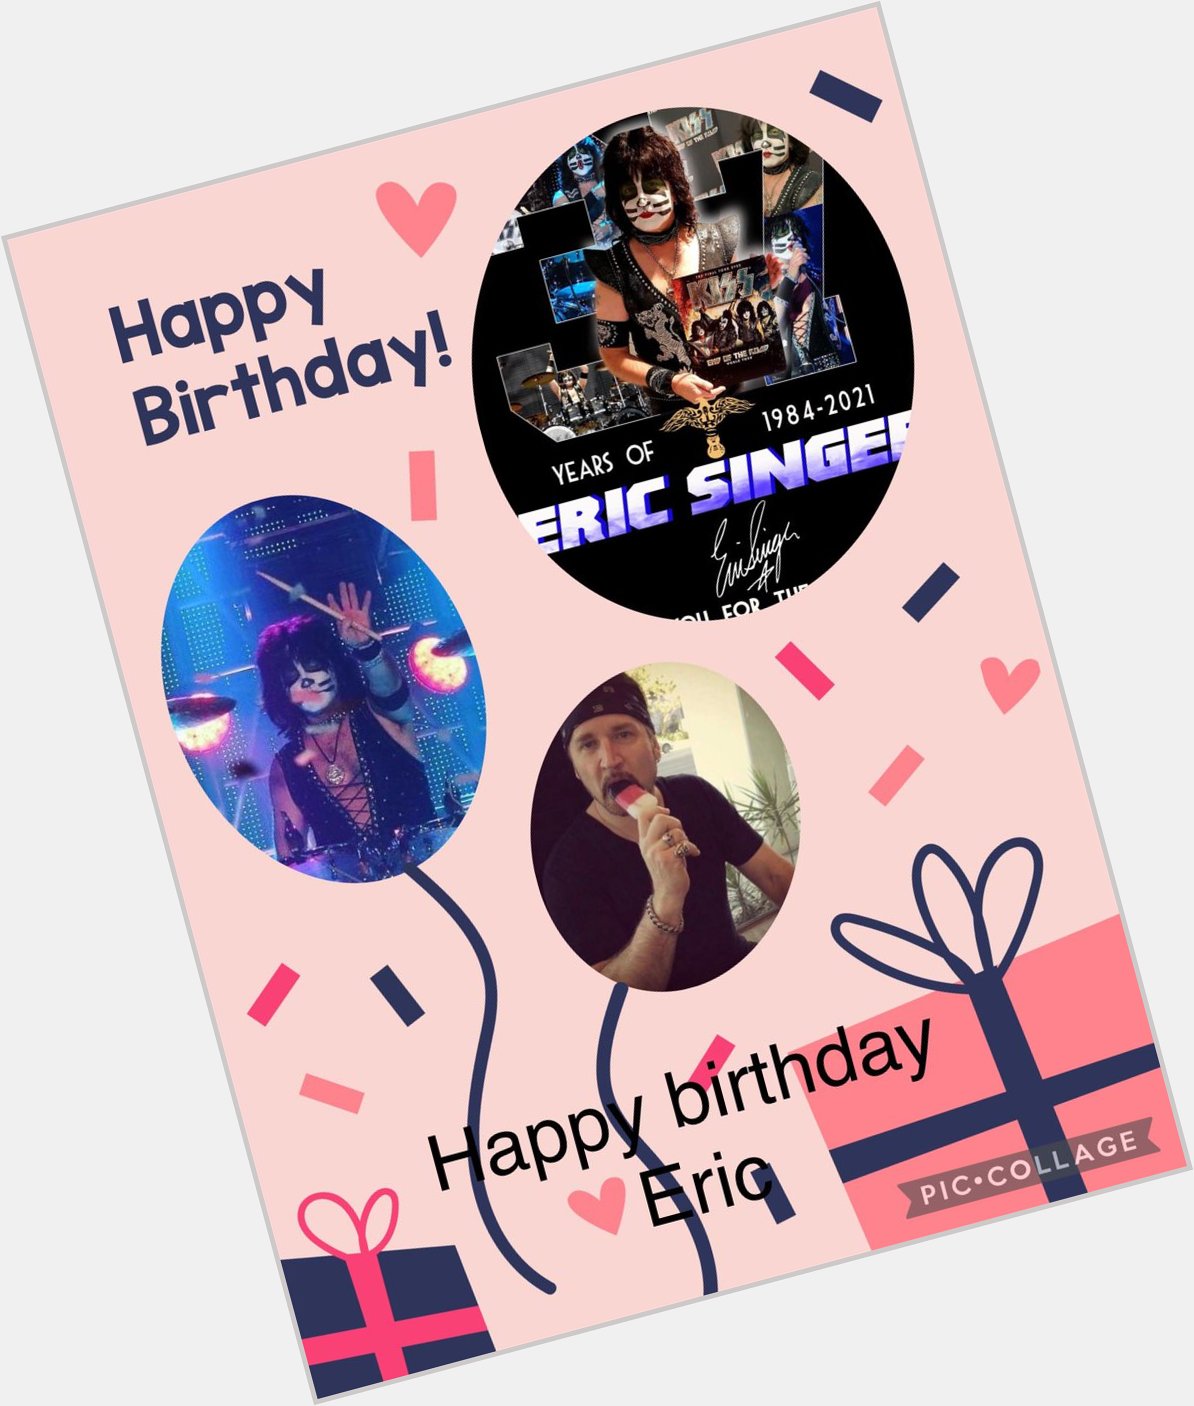 Happy birthday to Eric singer my favorite drummer 